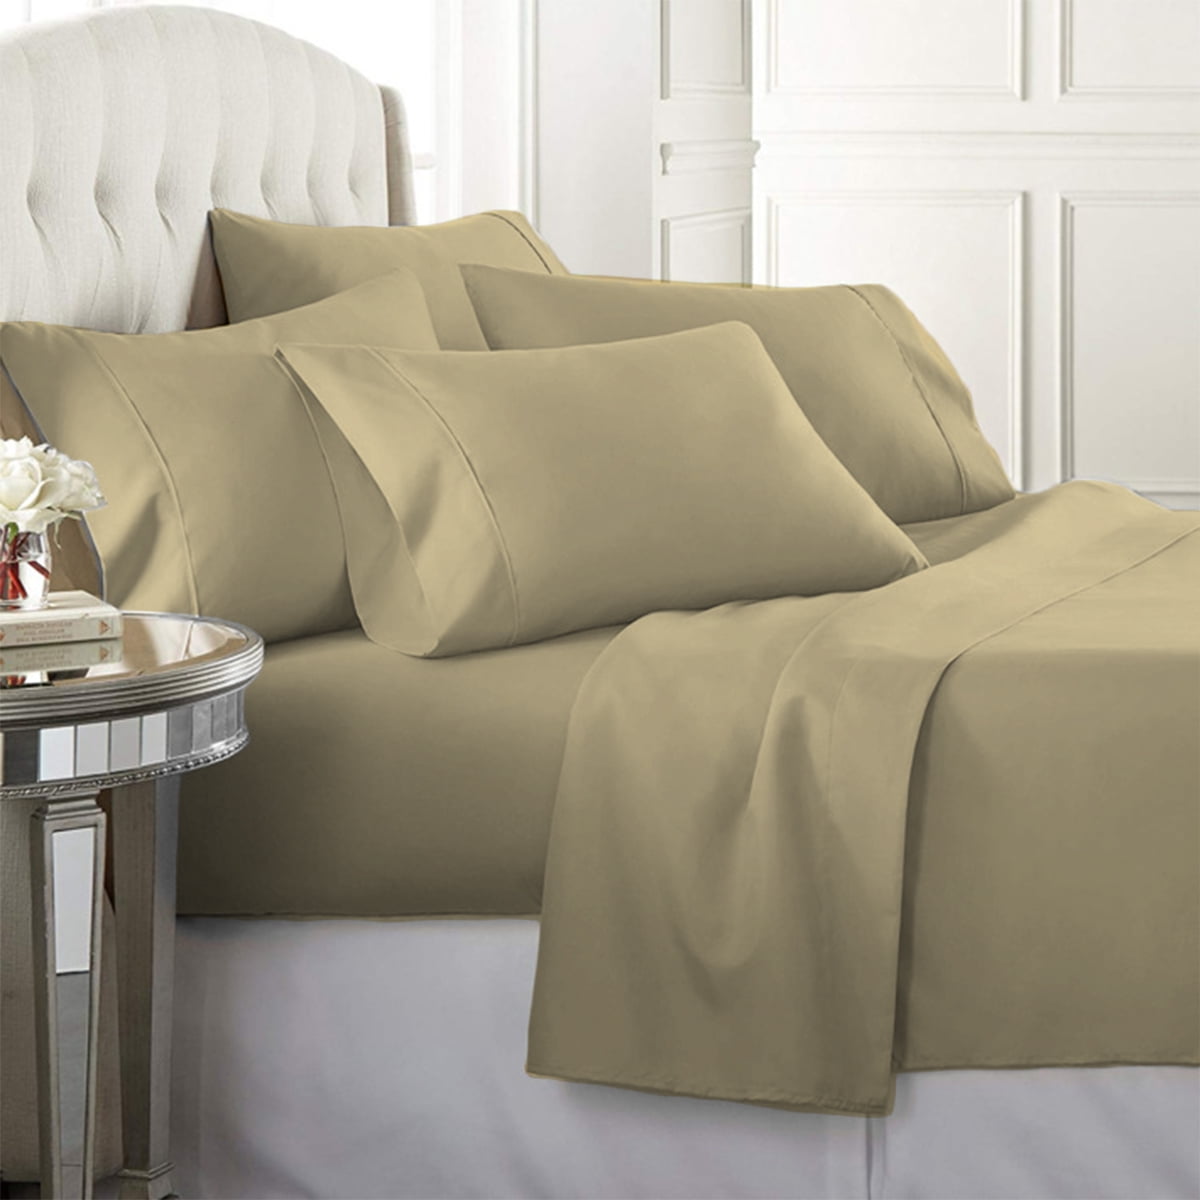 Sheet Set Velvet Plush Extra Soft Cozy 4-PC Sleep Bedding King Queen Twin Full 